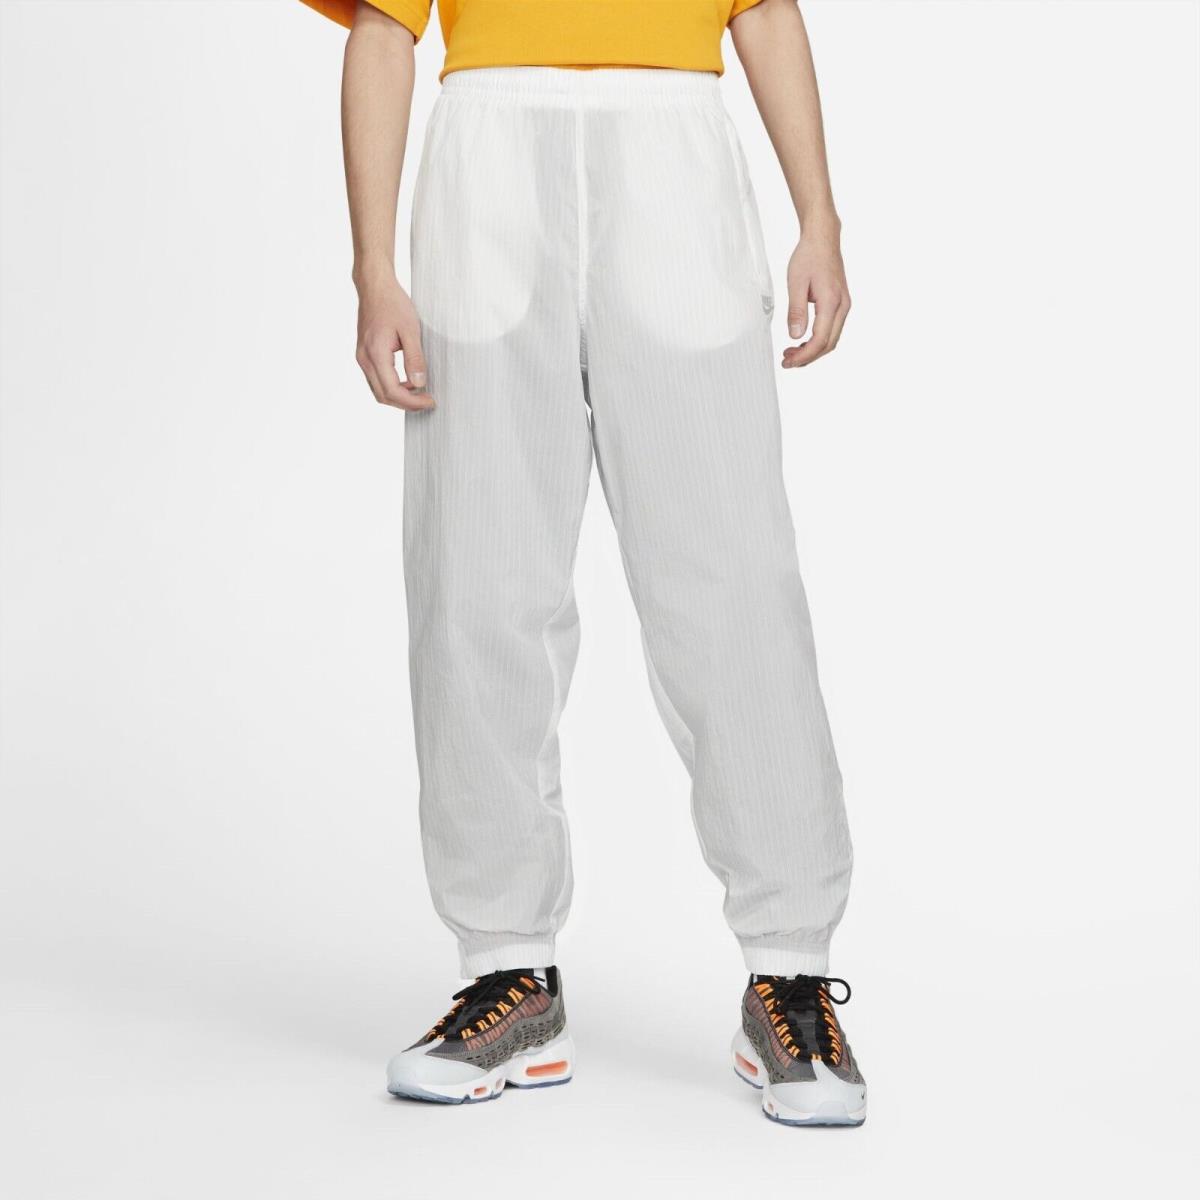 Nike Lab x Kim Jones Allover Print Track Pants DH6585 White Large